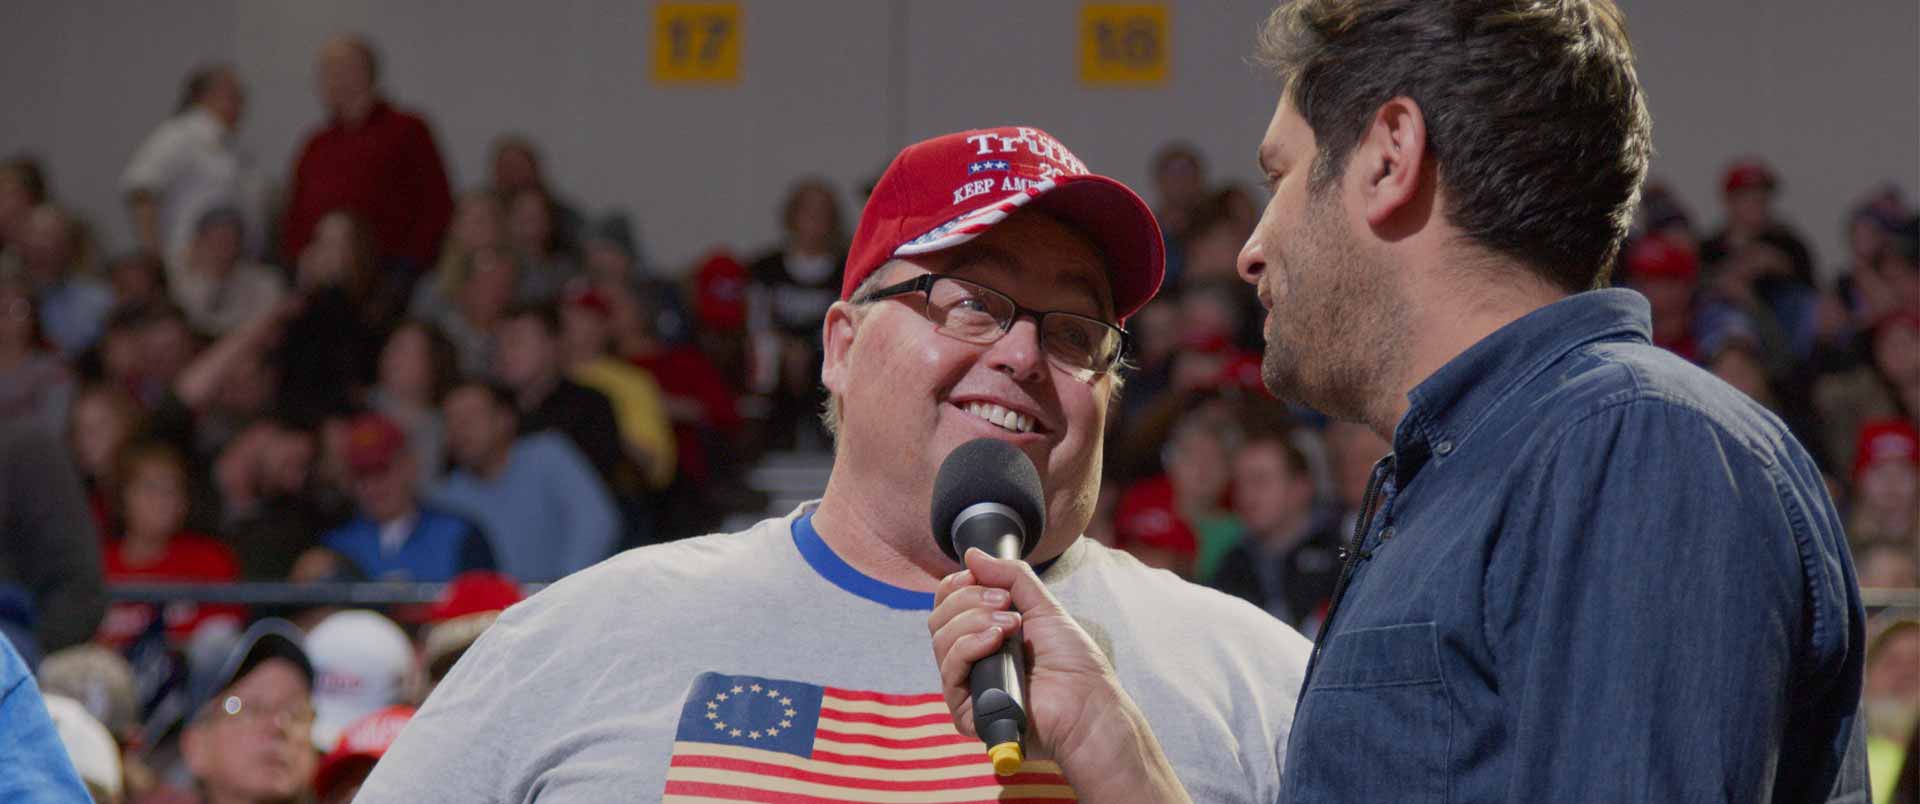 Inside the Iowa Trump Rally